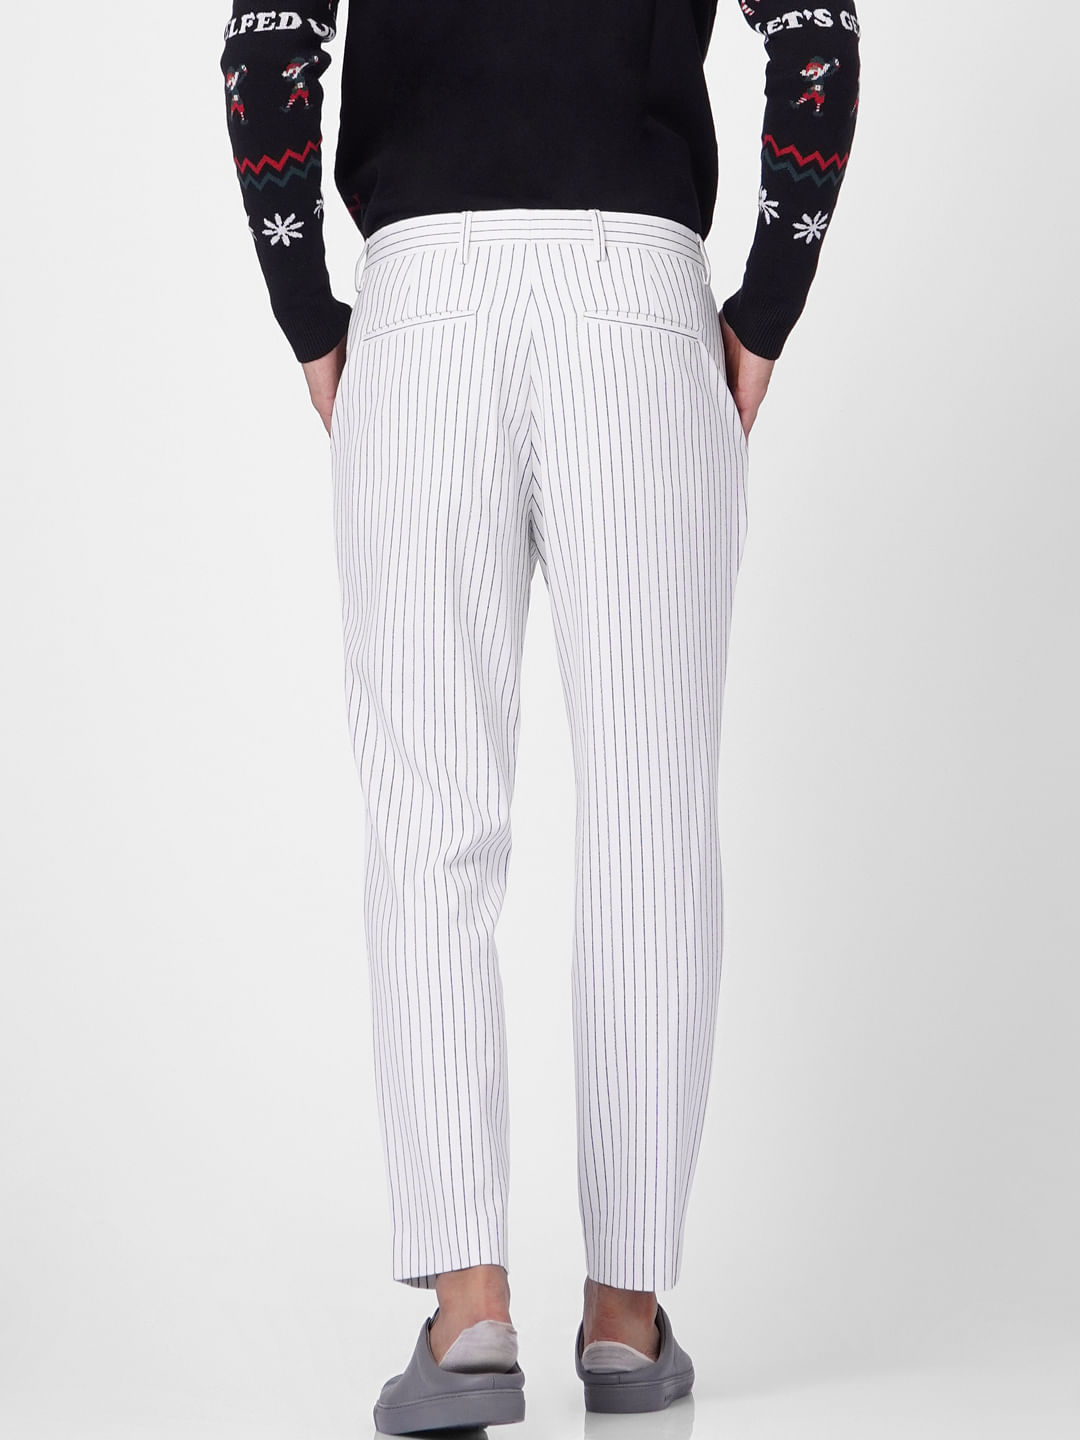 Buy Women White Stripe Formal Slim Fit Trousers Online - 740038 | Van Heusen